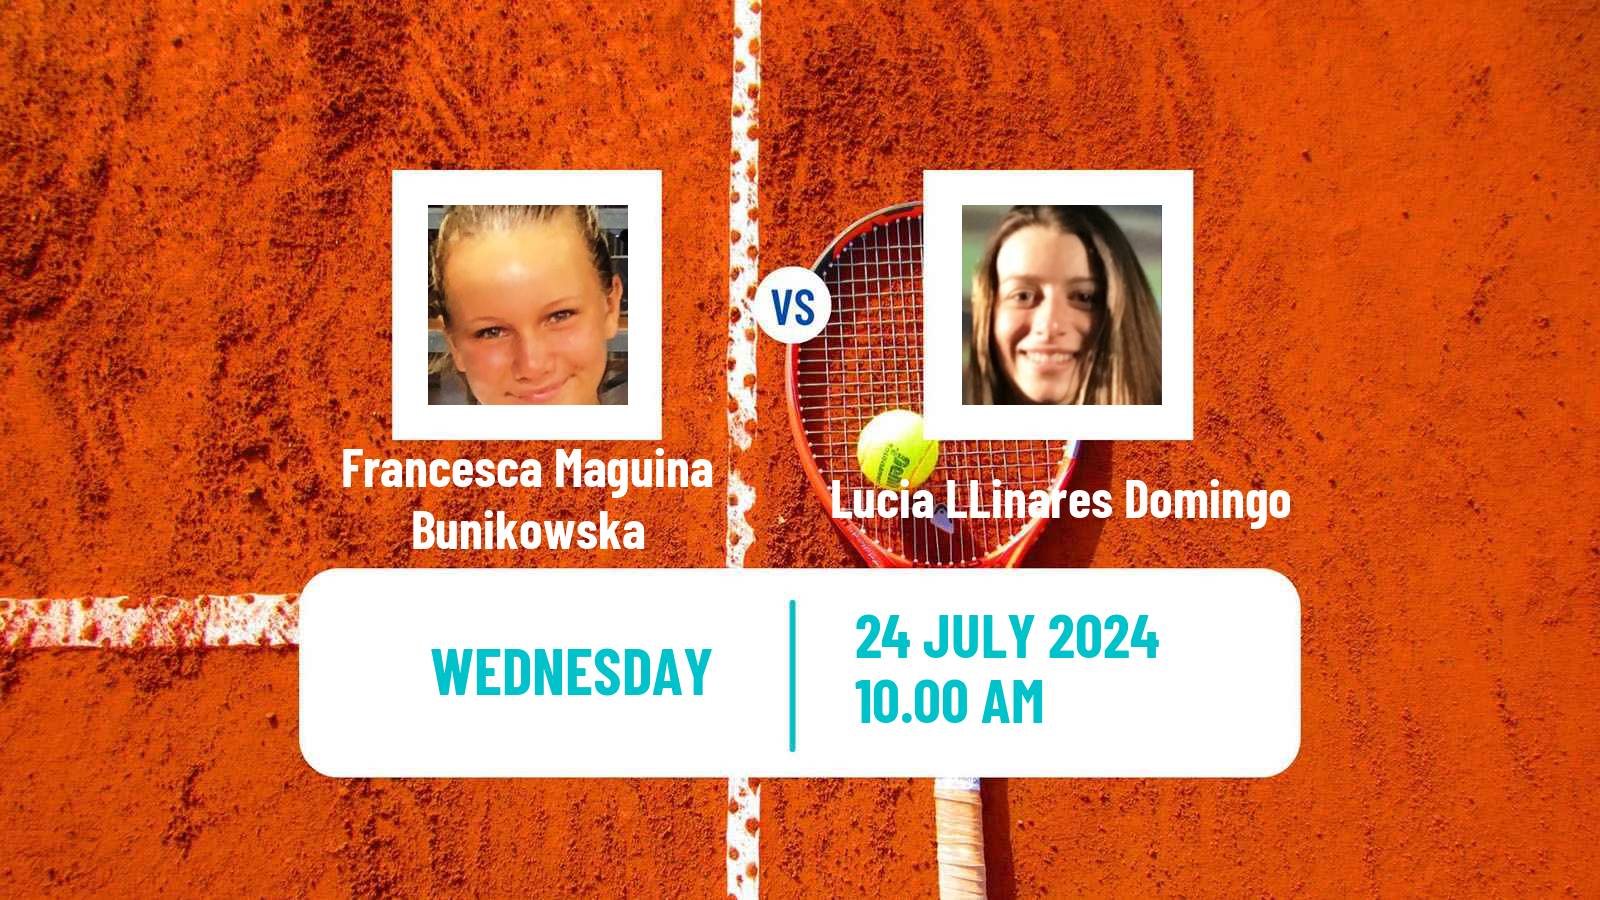 Tennis ITF W15 Monastir 28 Women Francesca Maguina Bunikowska - Lucia LLinares Domingo